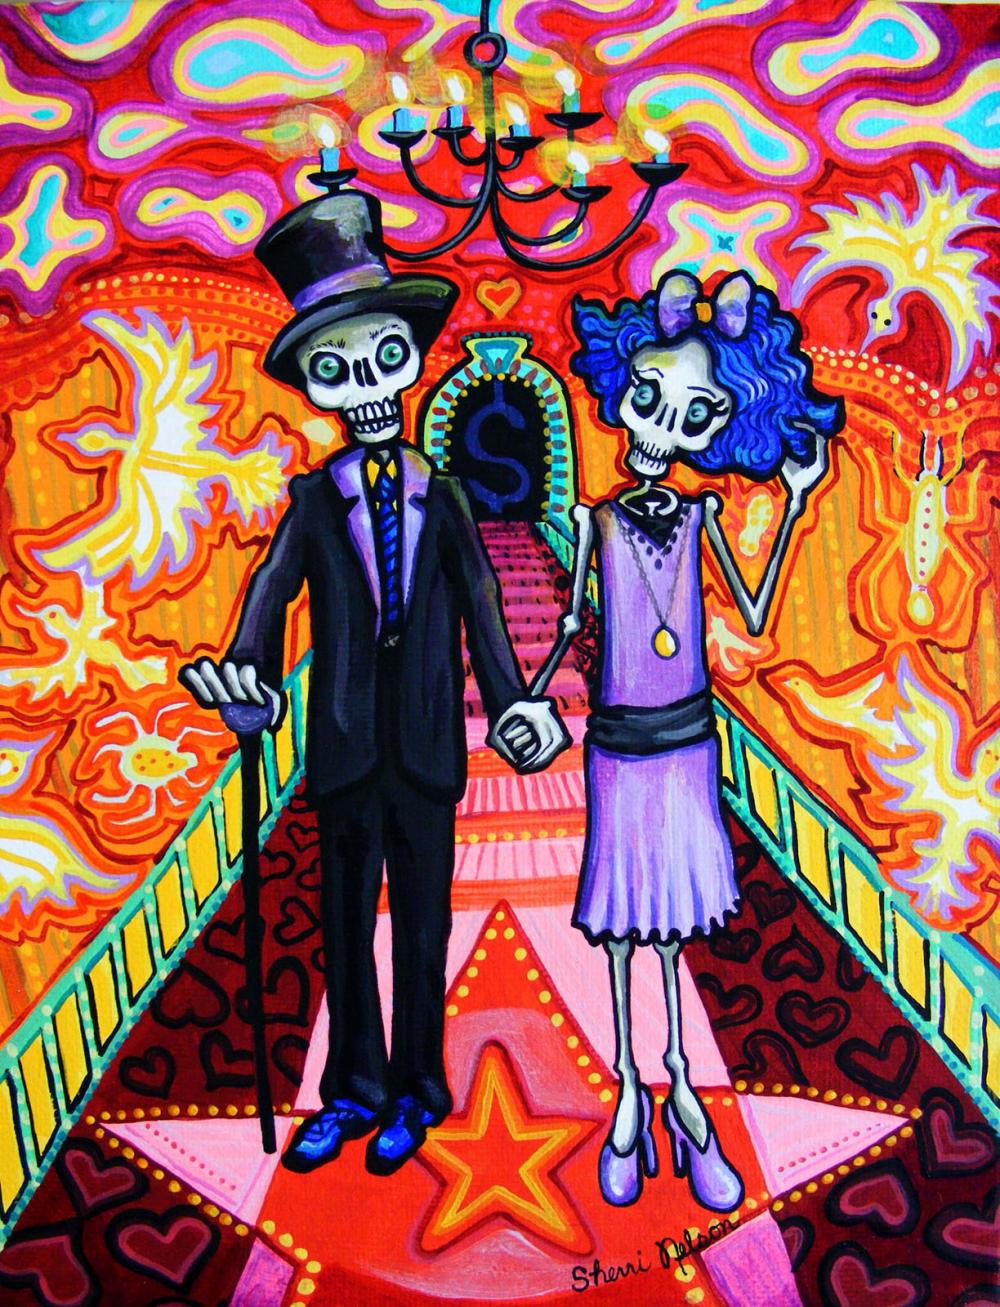 Calavera Wedding - Day Of The Dead Art Print - Sugar Skull Mexican Folk Painting